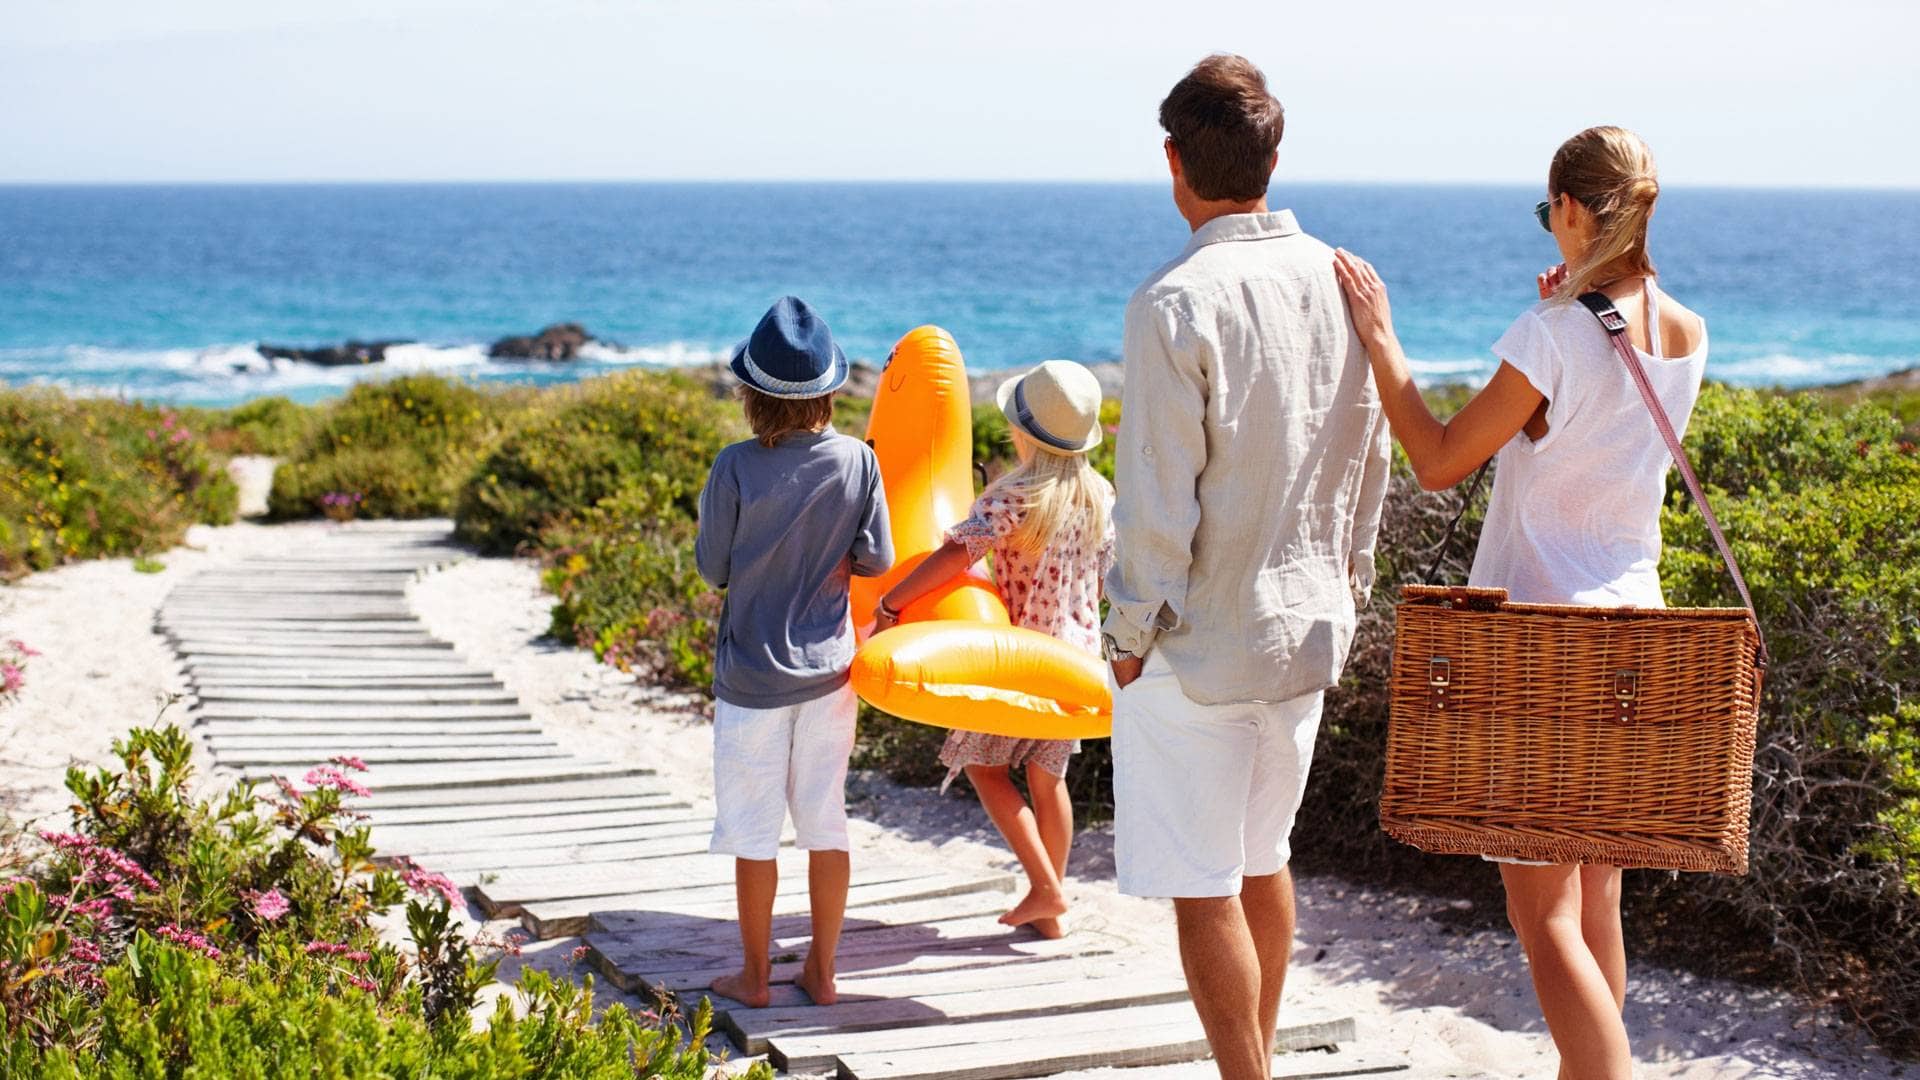 Holiday journey. Семья на море. Путешествие с семьей. Море пляж семья. Путешествие с детьми.